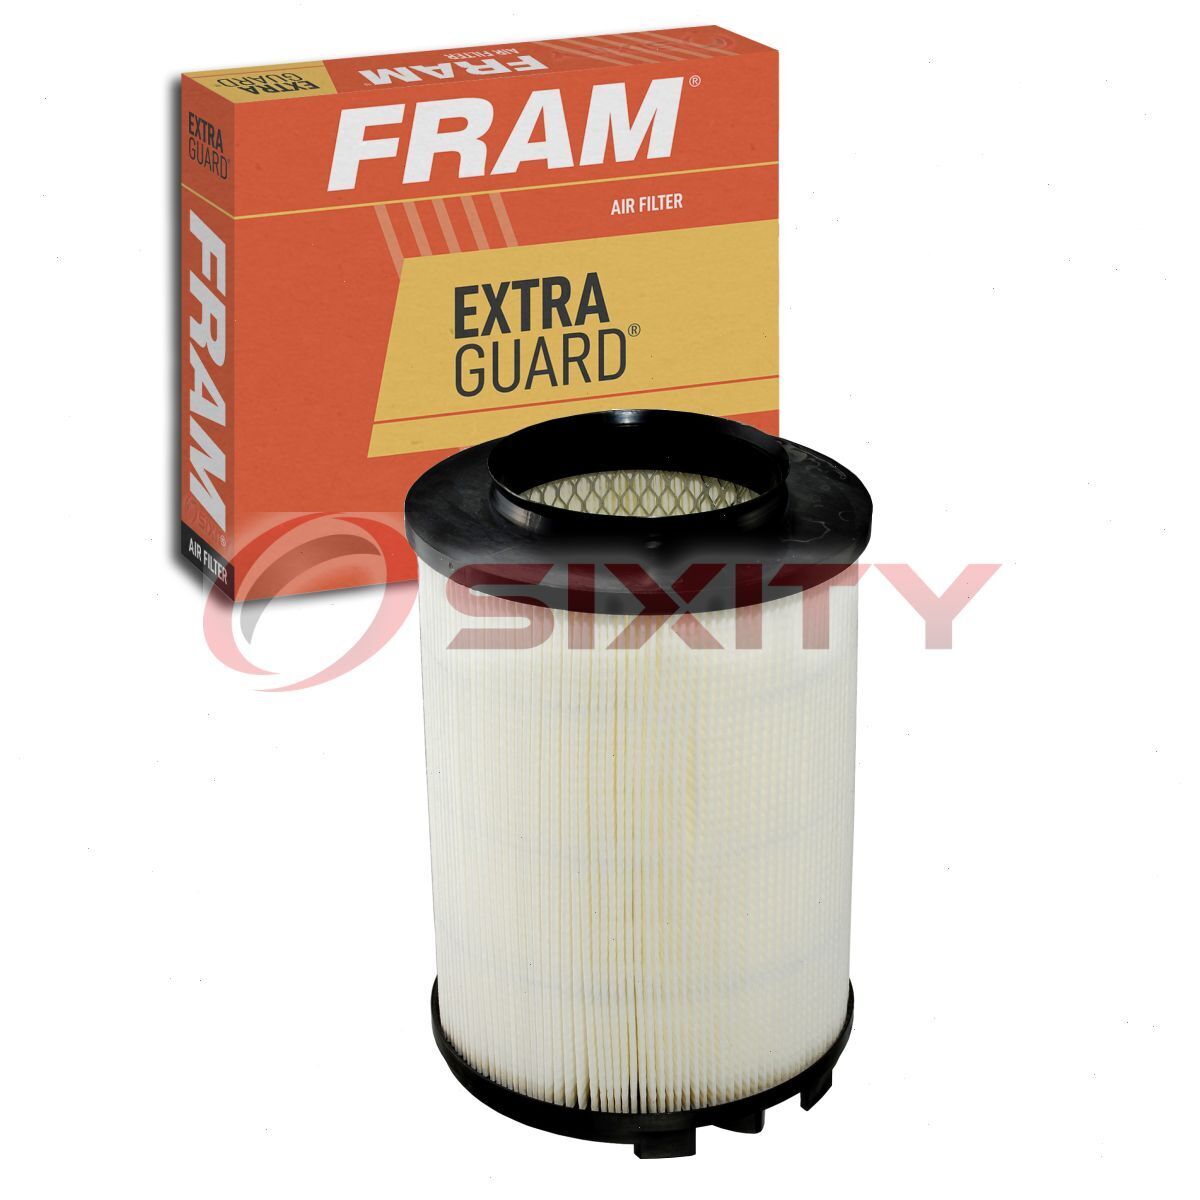 FRAM Extra Guard CA9778 Air Filter for TA35556 PA5556 PA4174 LX 1005 gv